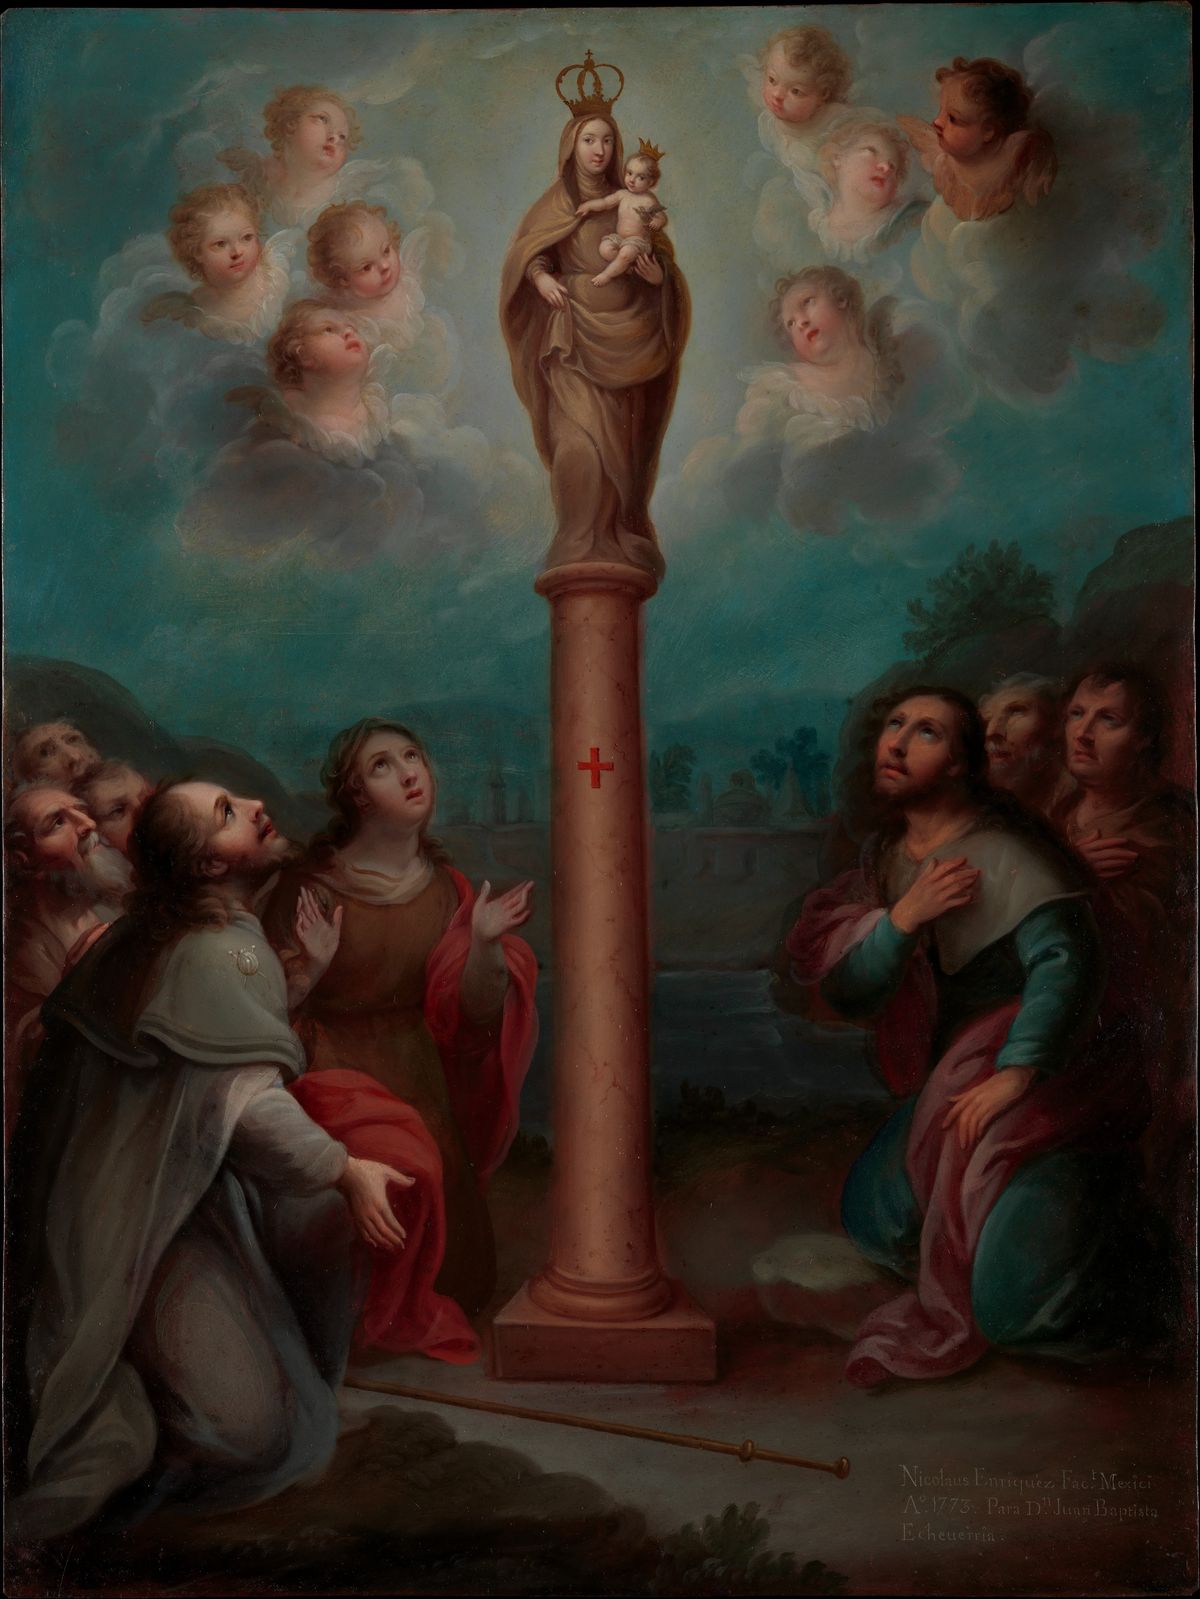 The Apparition of the Virgin of El Pilar to St. James (1773) by Nicolás Enríquez - Public Domain Catholic Painting